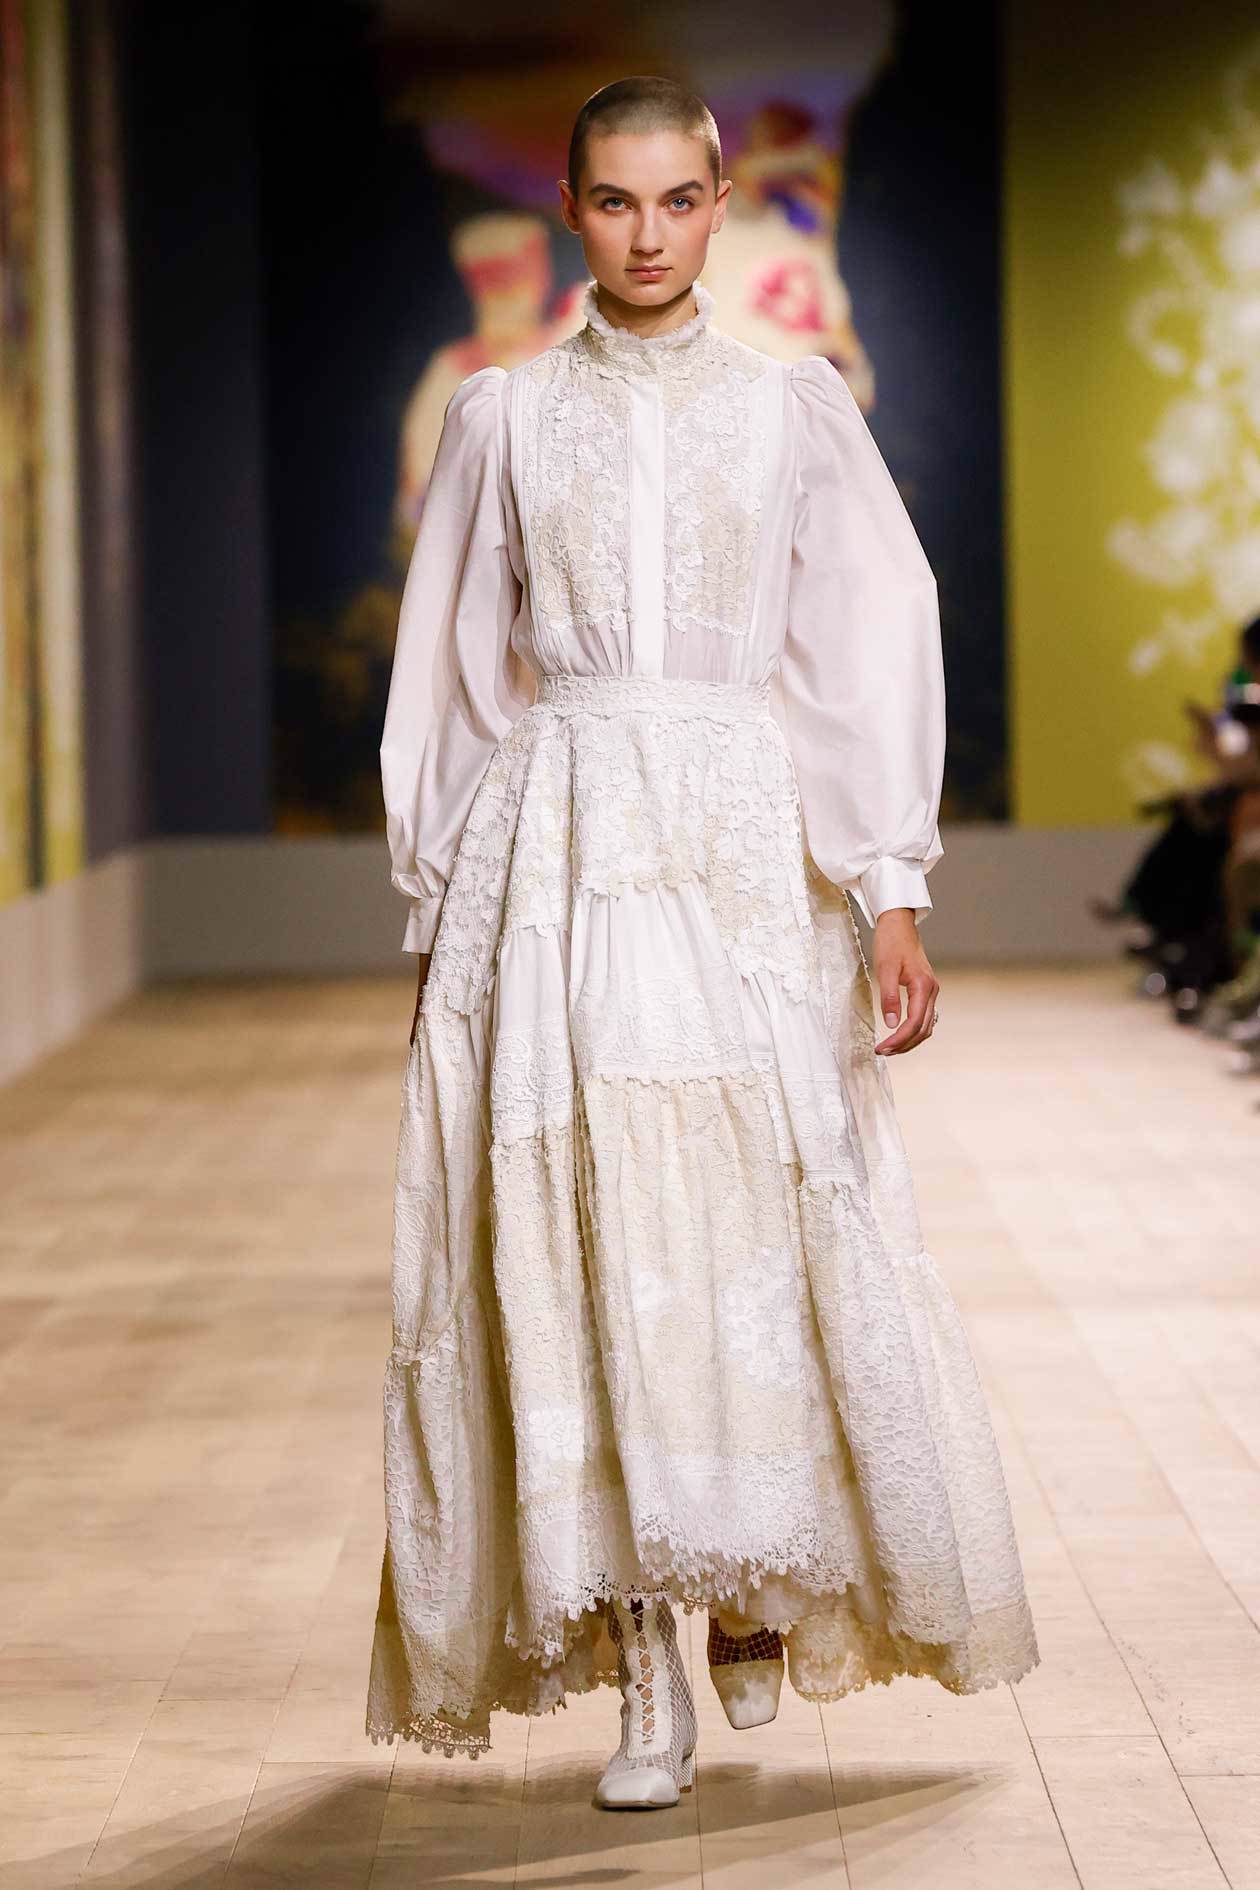 Christian Dior's A/W 2023 Haute Couture Collection Contemplates